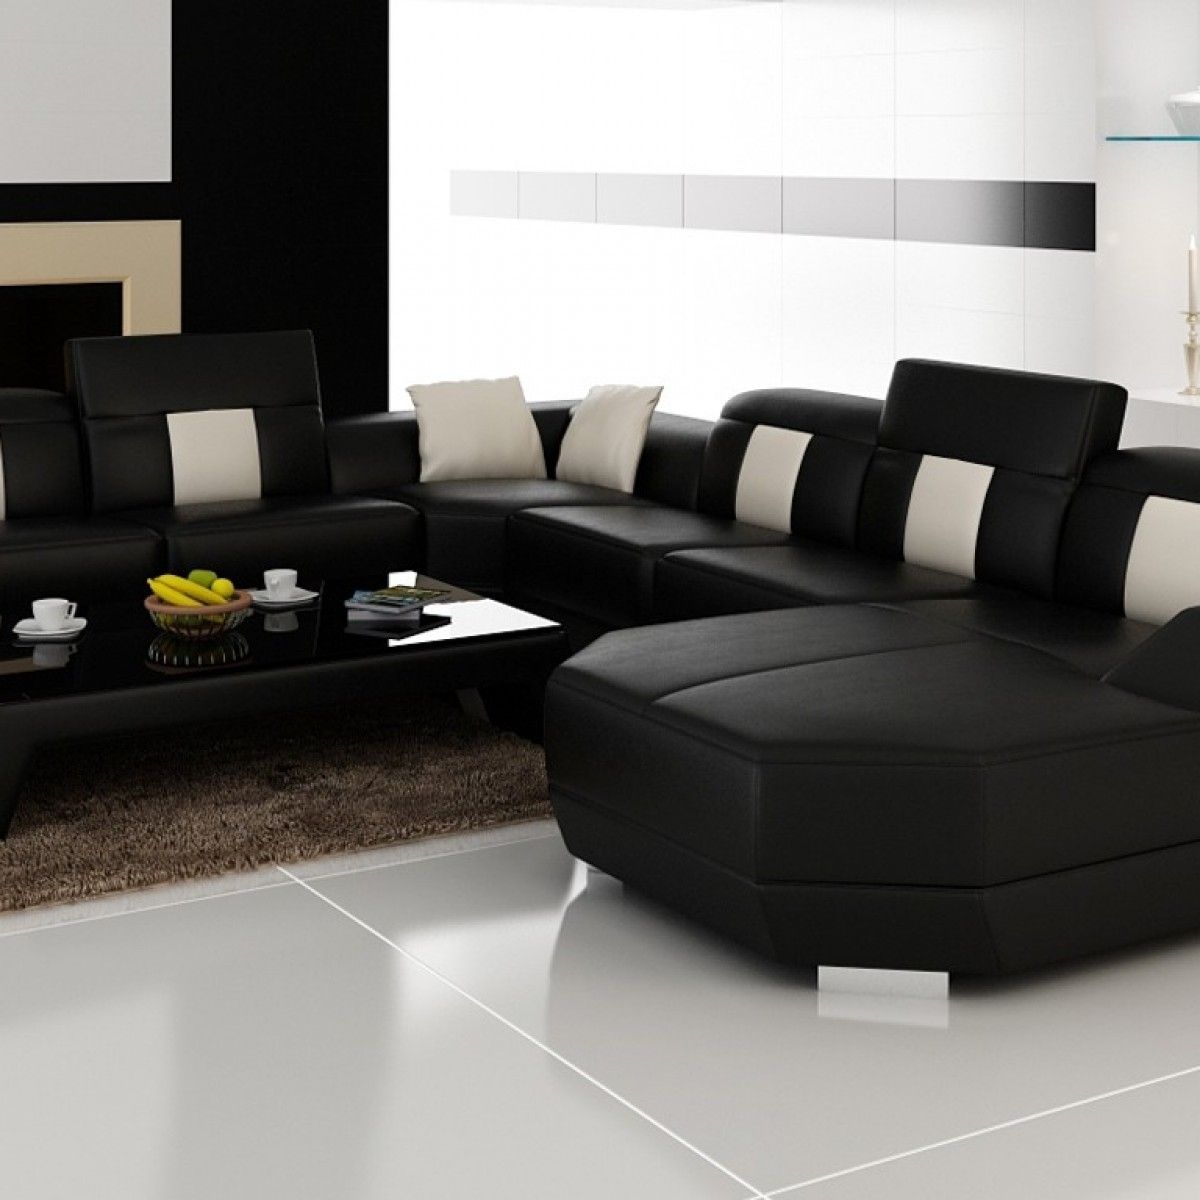 Furniture : Sectional Sofa Nz Sectional Sofa $200 Sectional Sofa Intended For Nz Sectional Sofas (View 5 of 10)